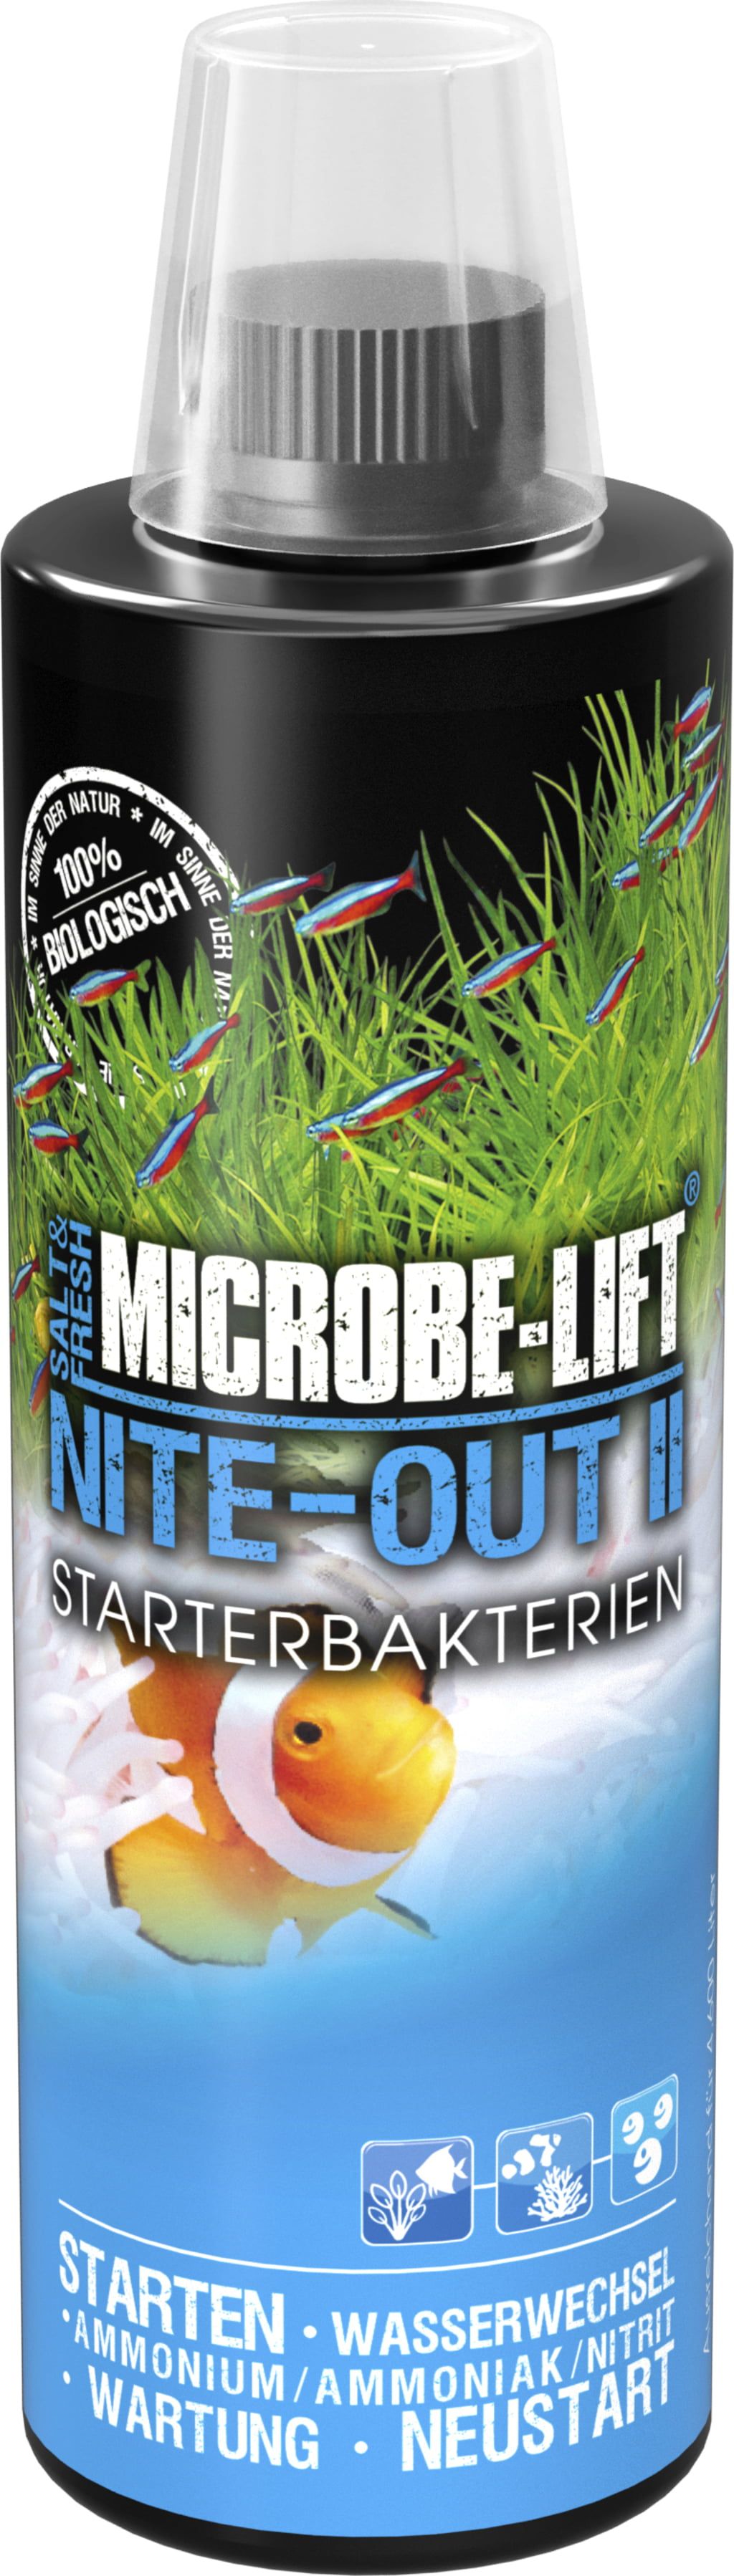 Microbe-lift Nite Out Ii 473ml - Bacterias Nitrificantes